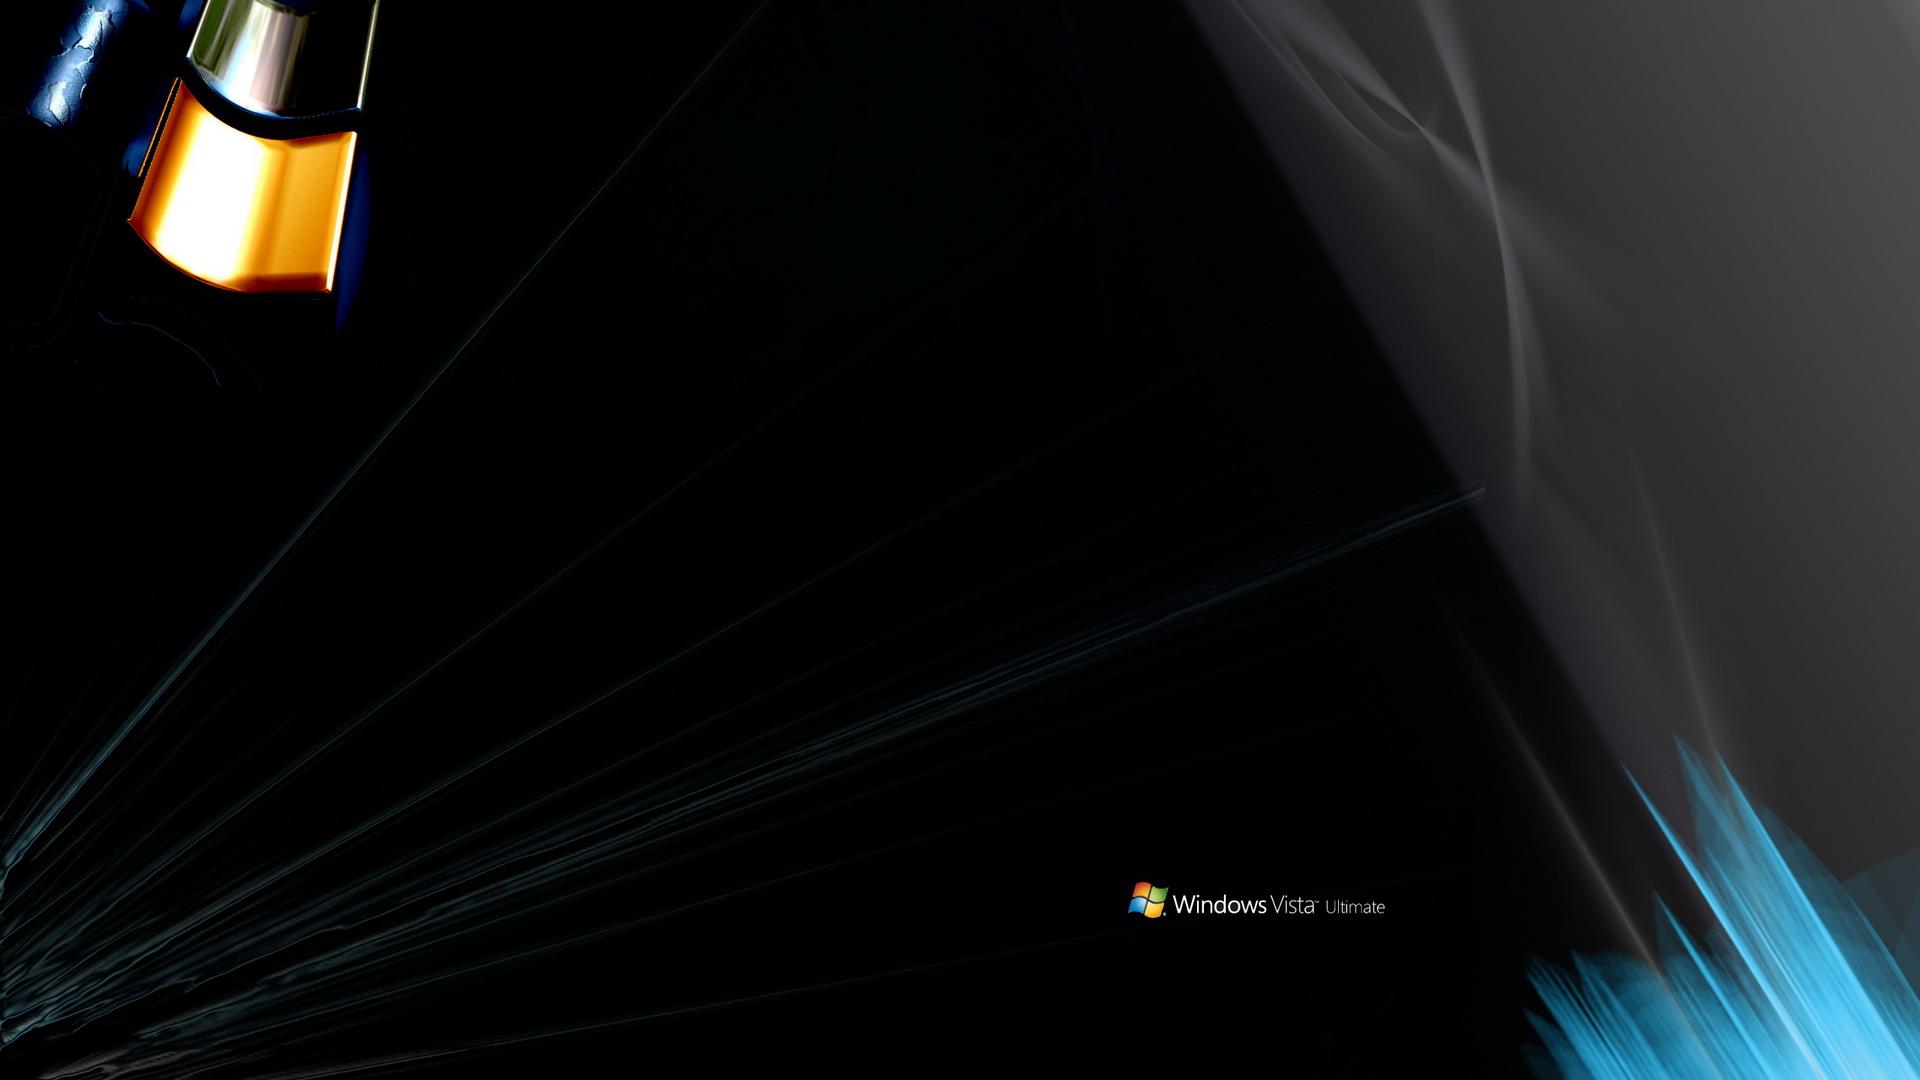 Windows Vista Puter Wallpaper Desktop Background